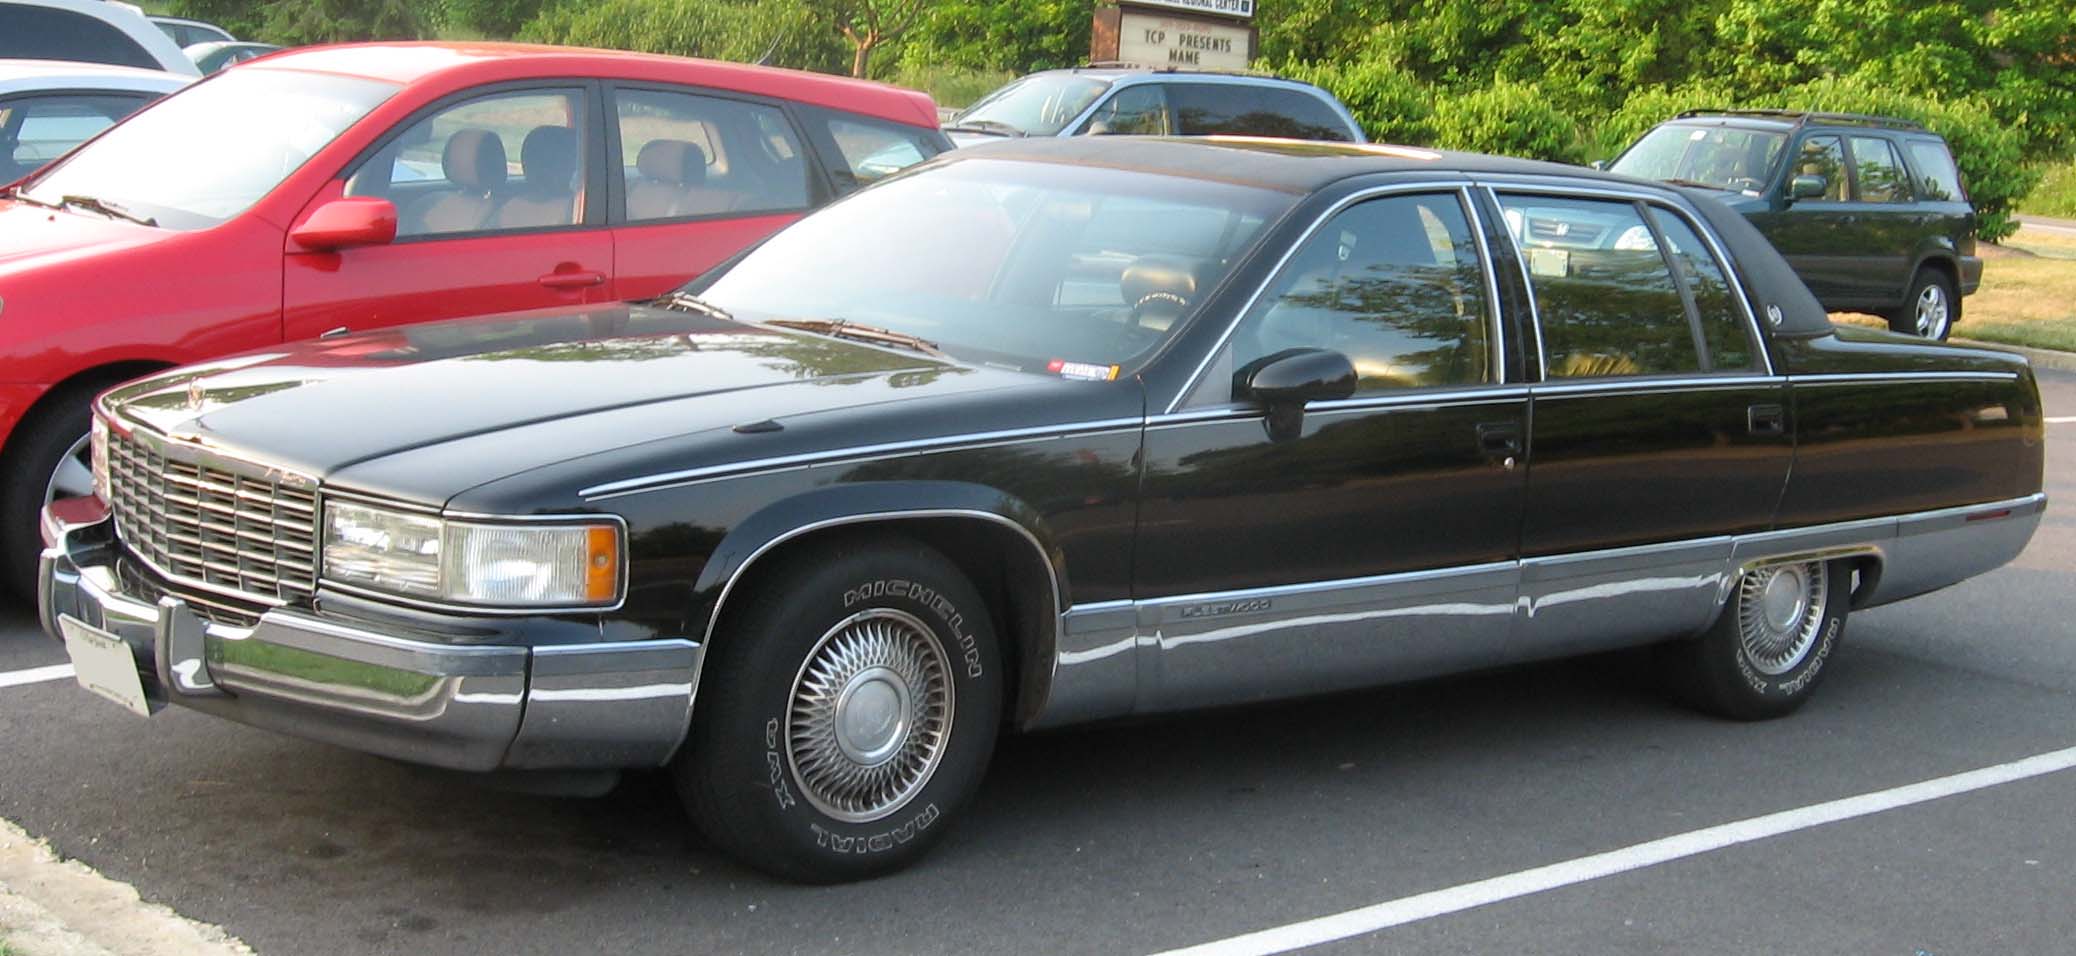 File:93-96 Cadillac Fleetwood.jpg - Wikipedia, the free encyclopedia